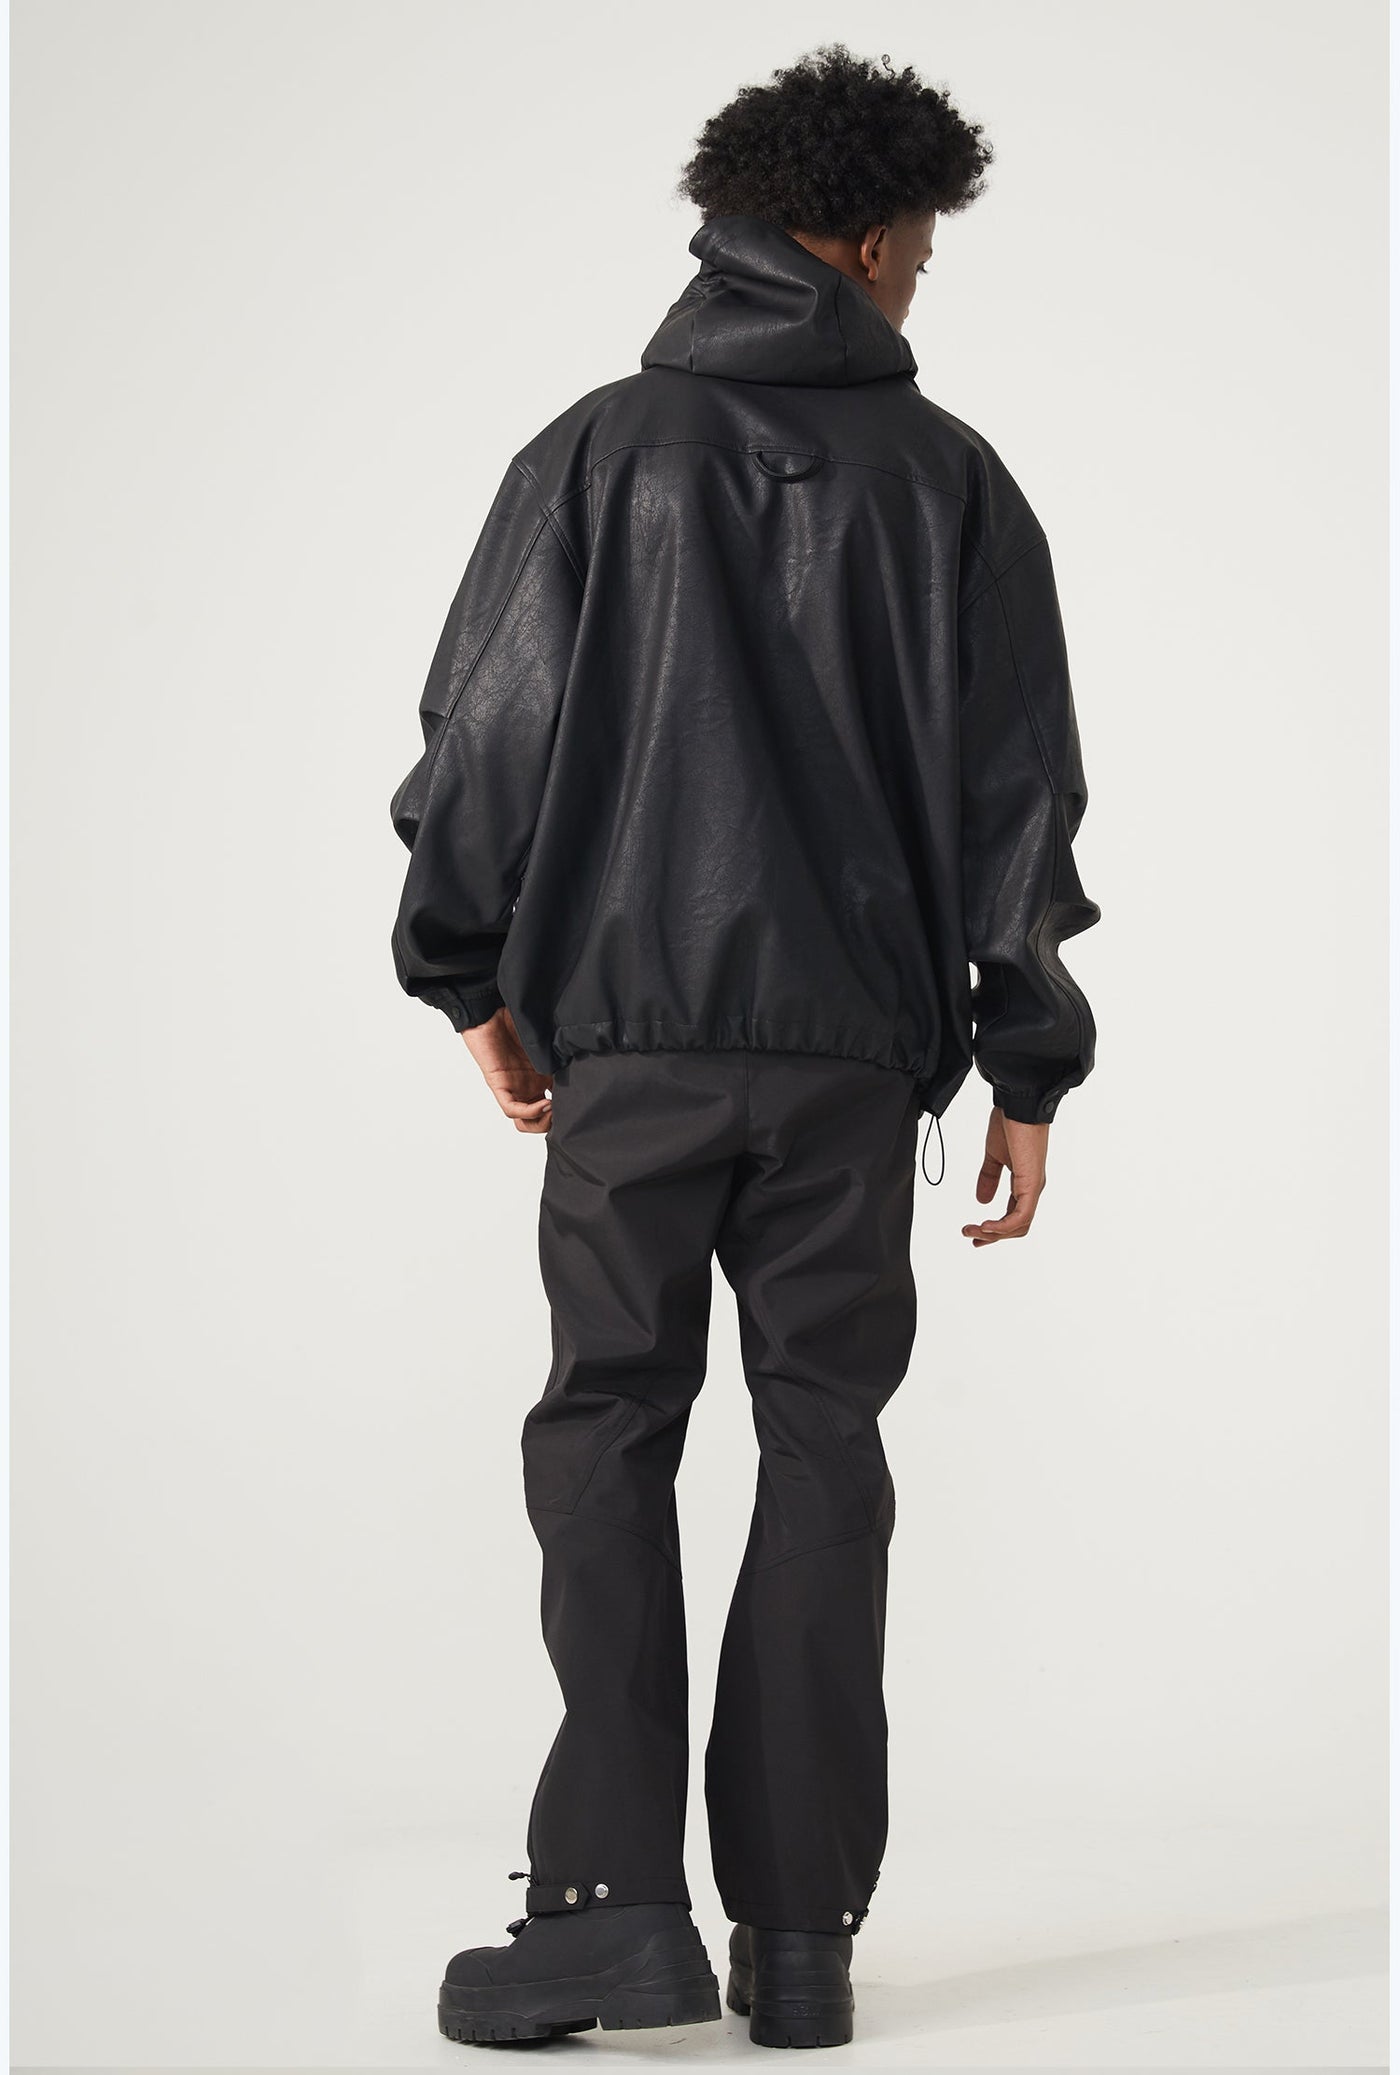 Slant Pocket Distressed PU Leather Hoodie Korean Street Fashion Hoodie By R69 Shop Online at OH Vault